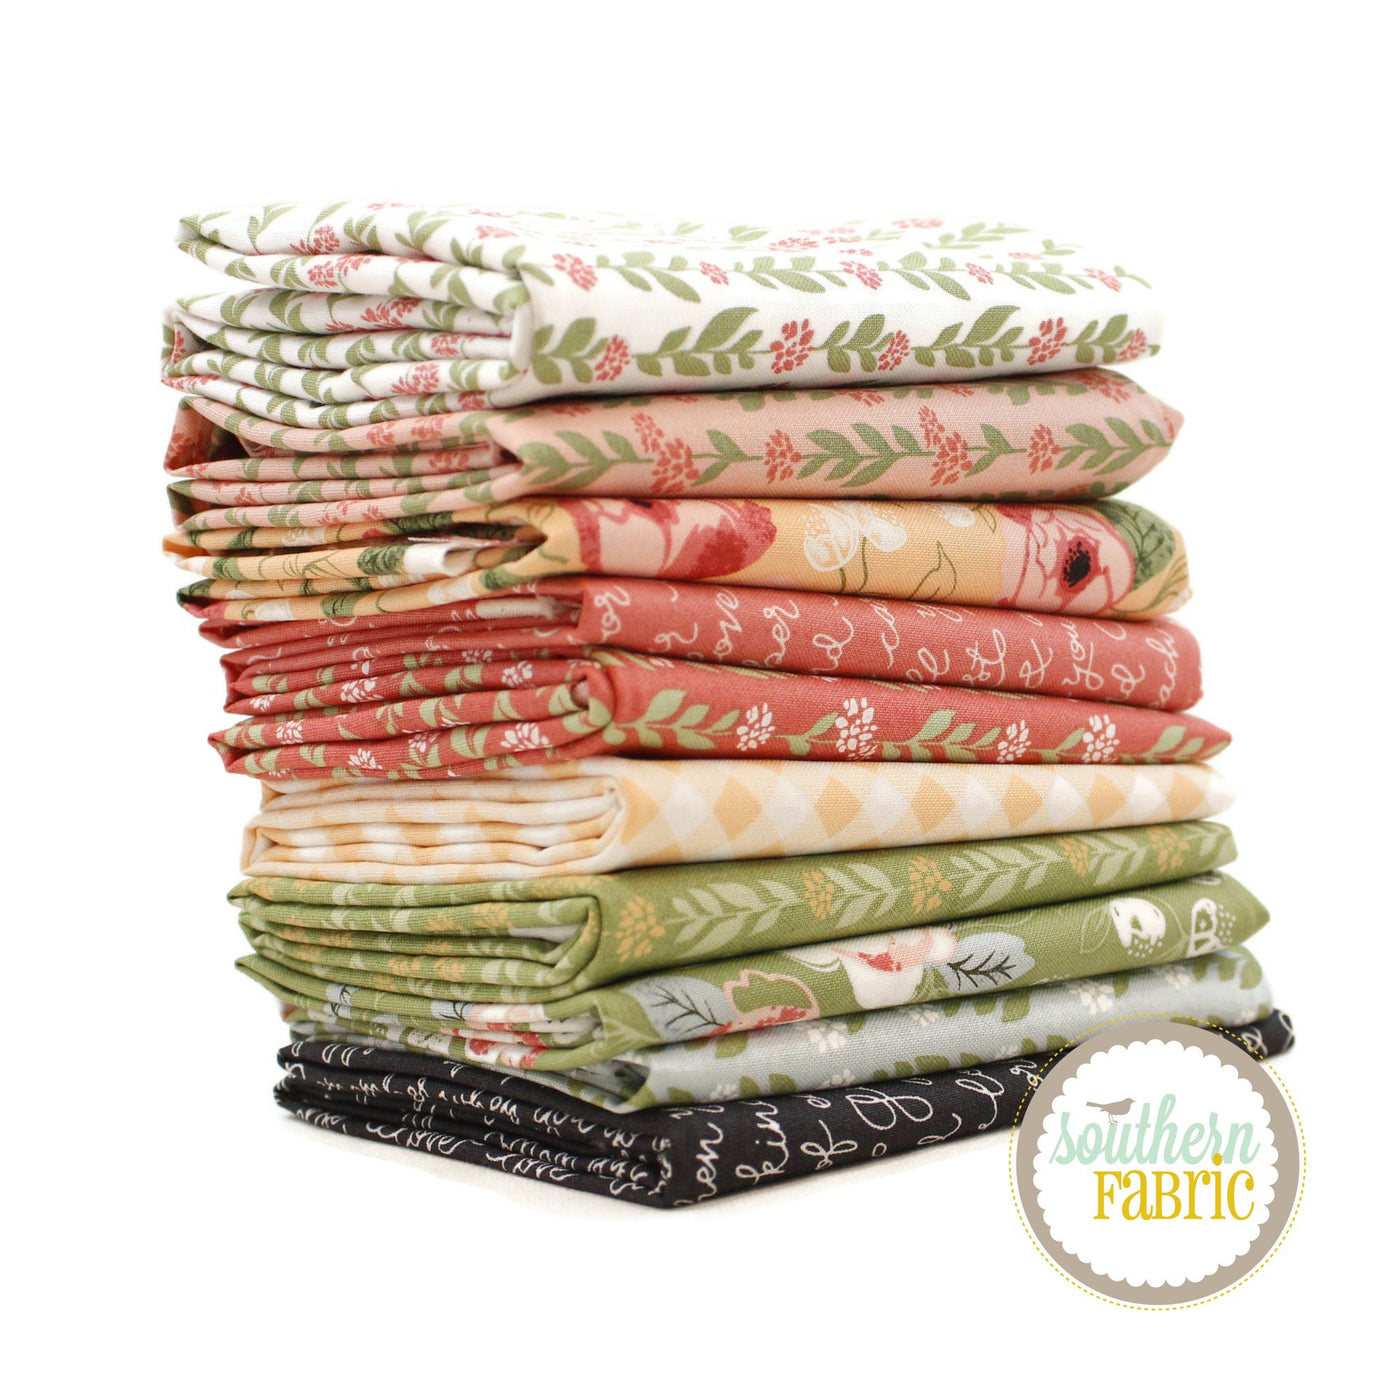 Country Rose Fat Quarter Bundle (10 pcs) by Lella Boutique for Southern Fabric (LB.CR.FQ)